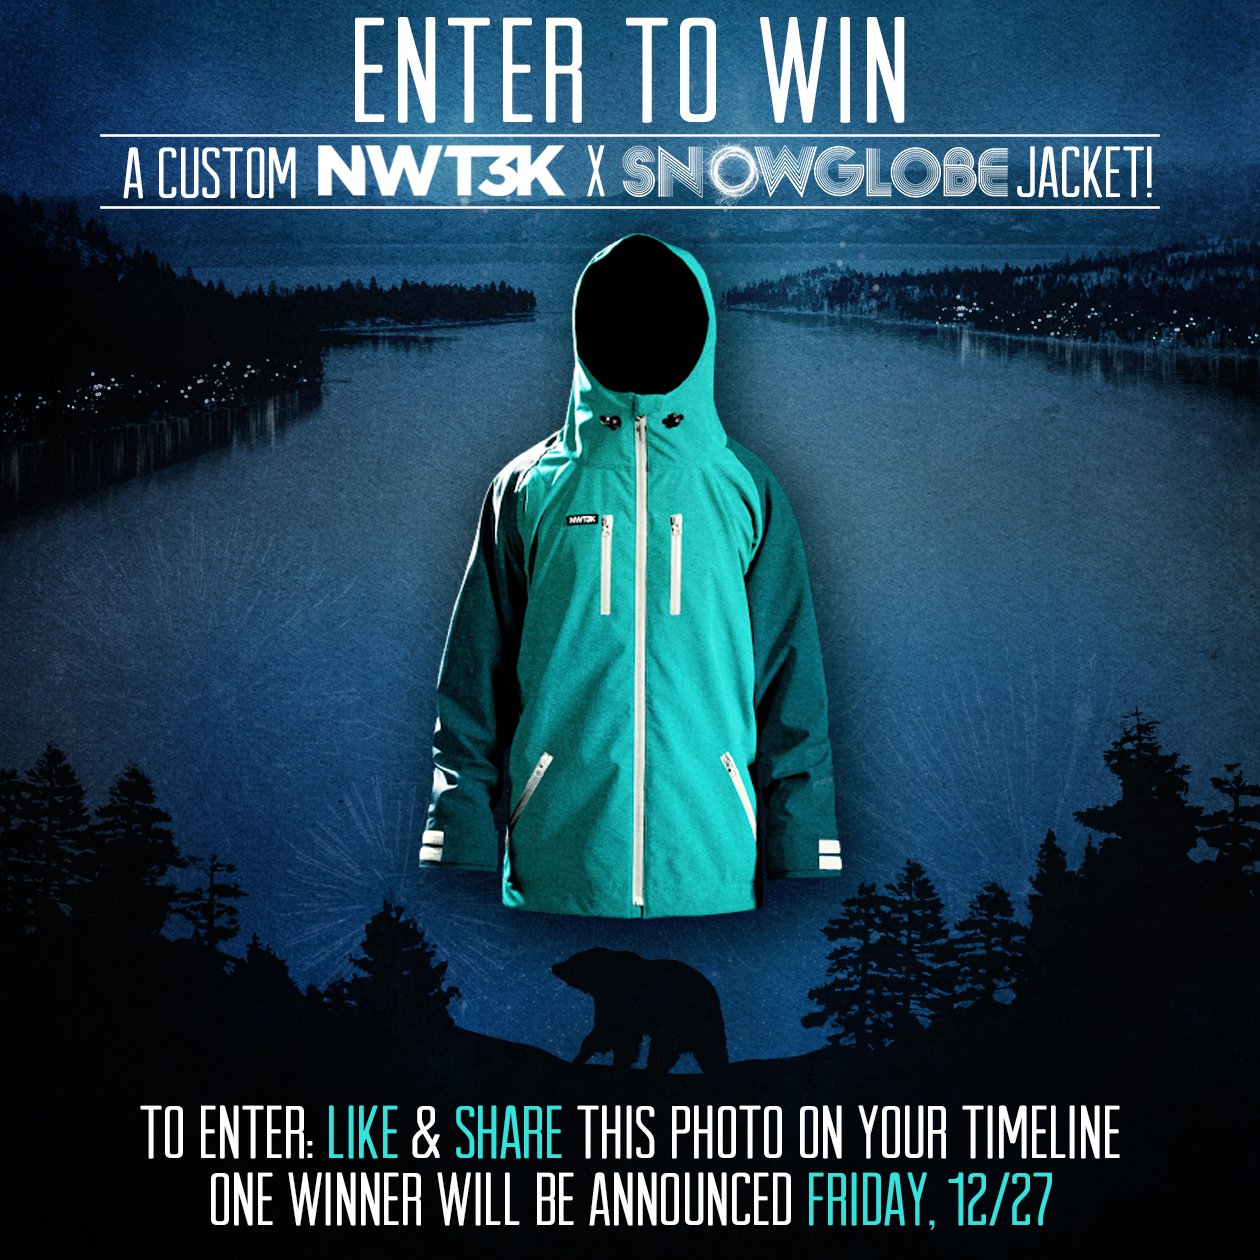 NWT3K & Snowglobe Jacket Giveaway